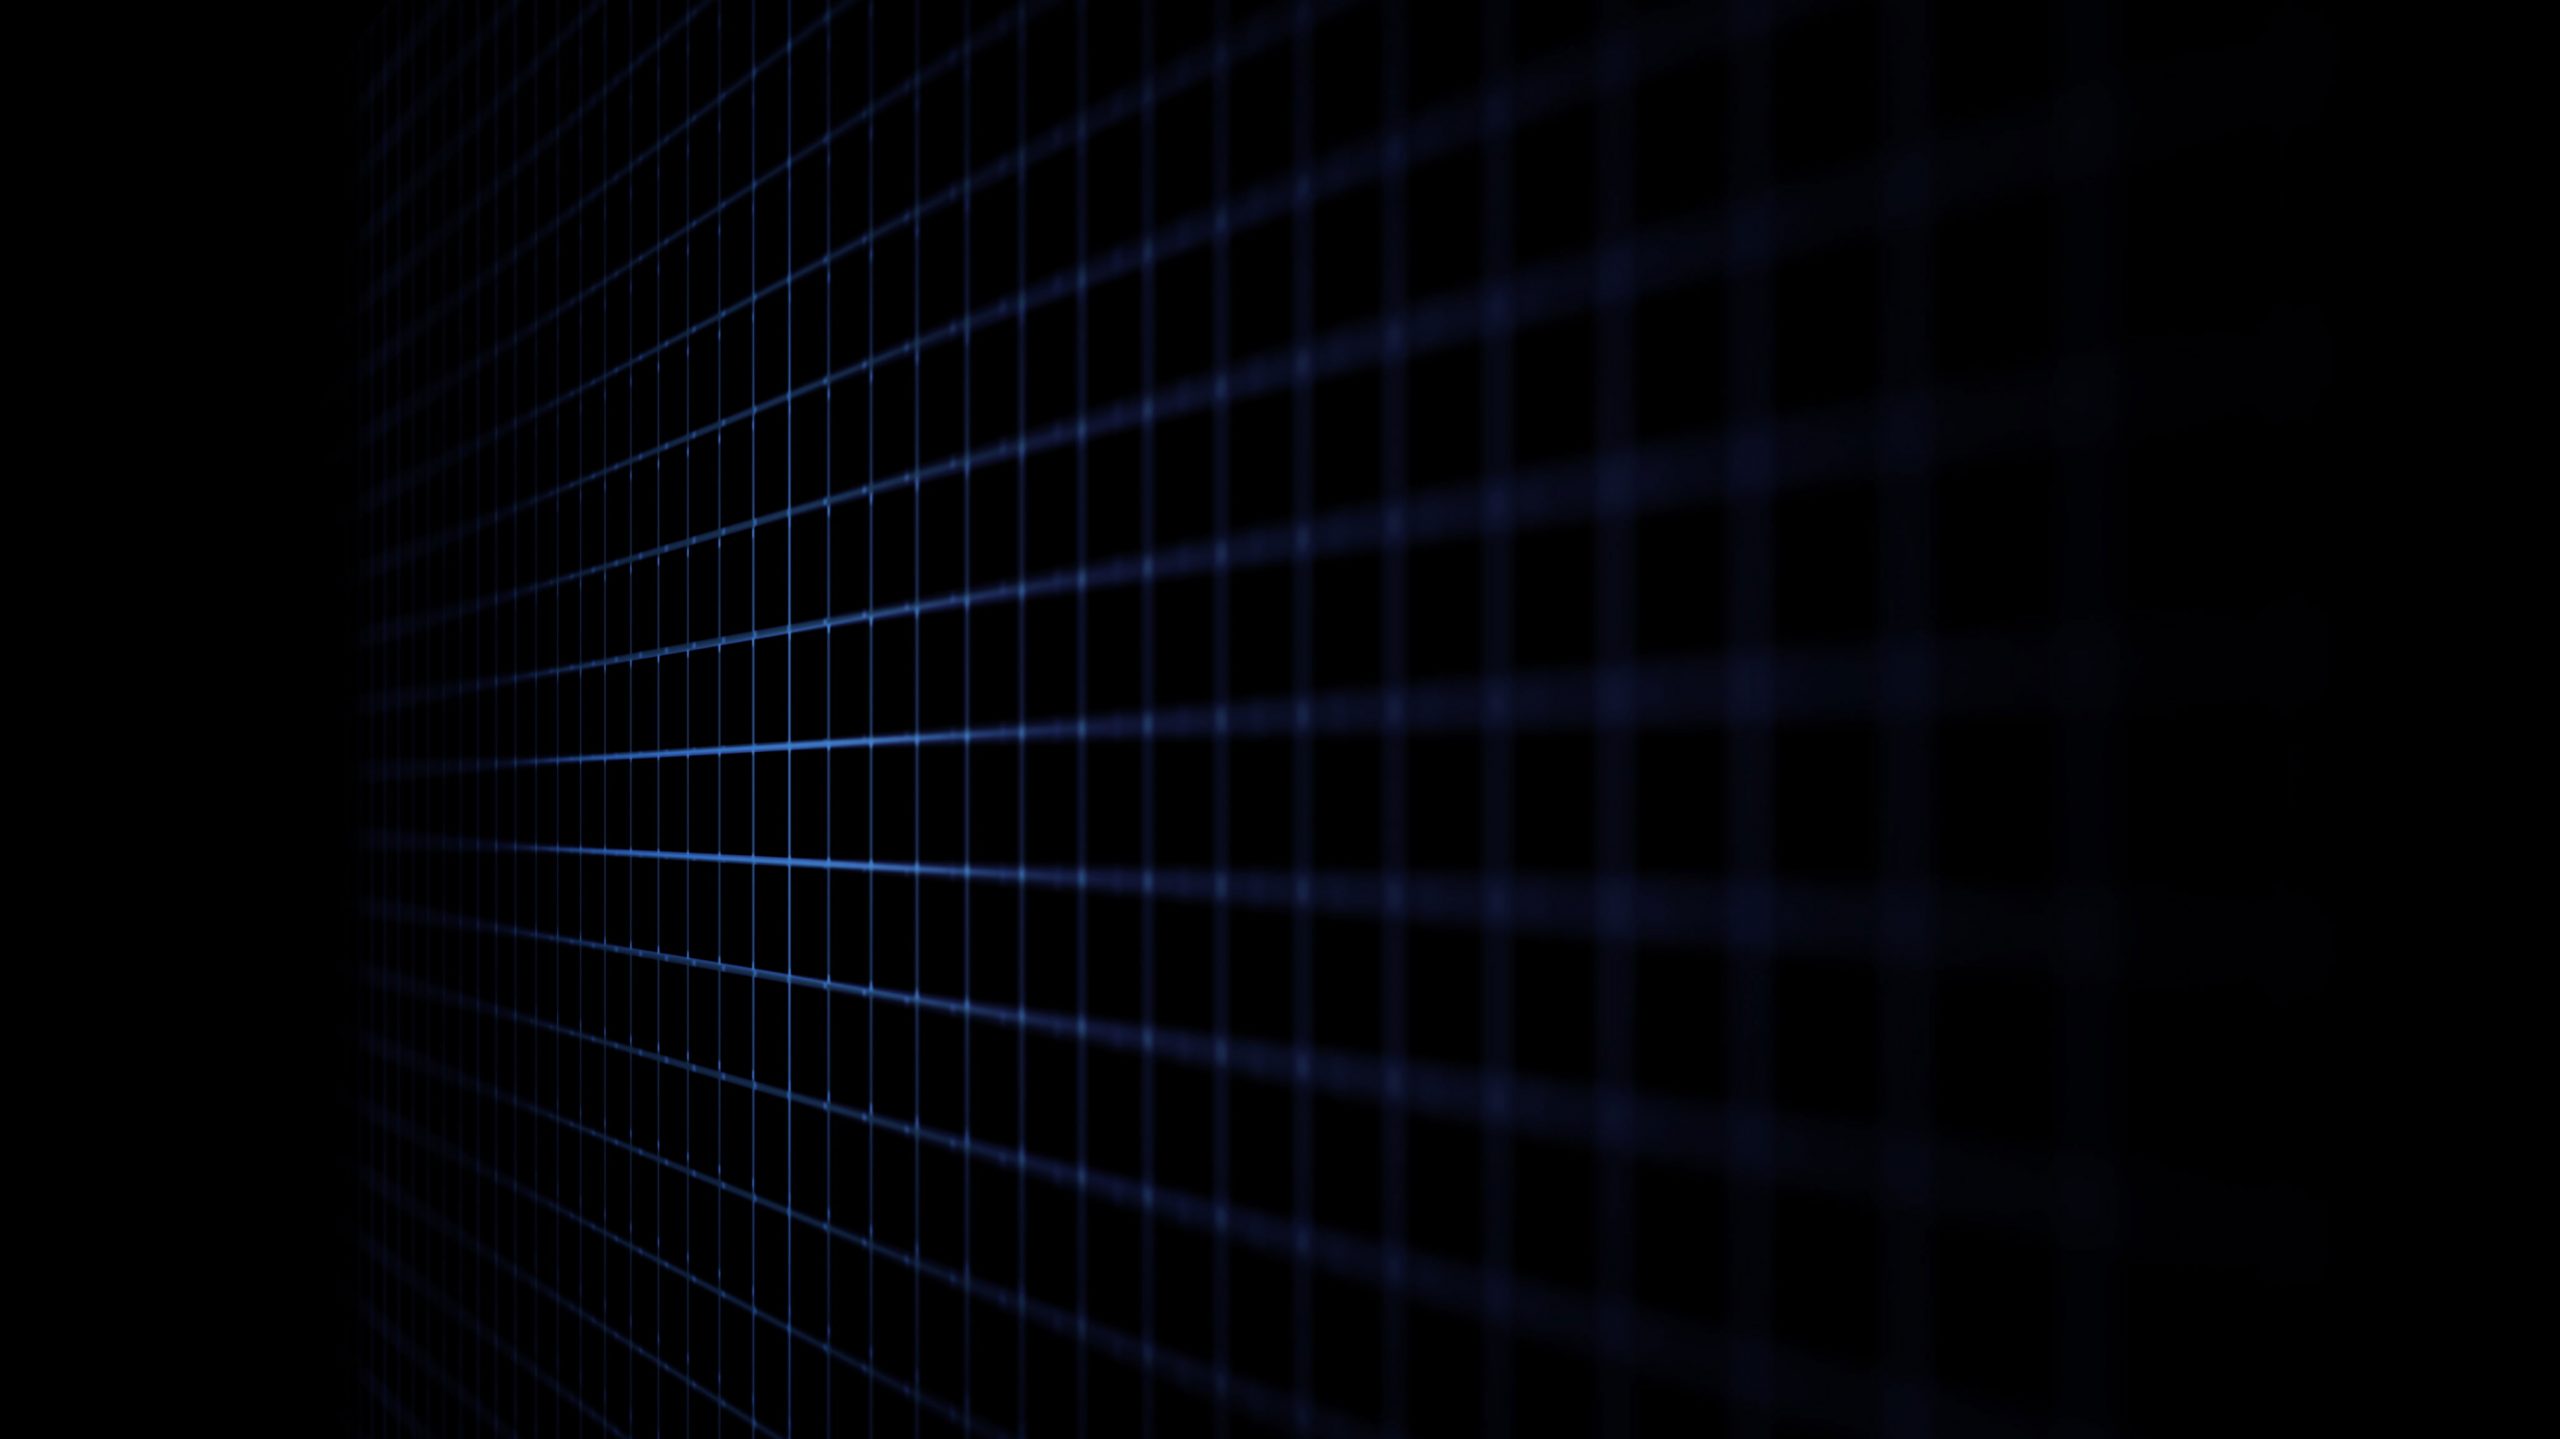 4K Dark wallpaper, Blue lines, Grid lines, backgrounds, pattern, full frame